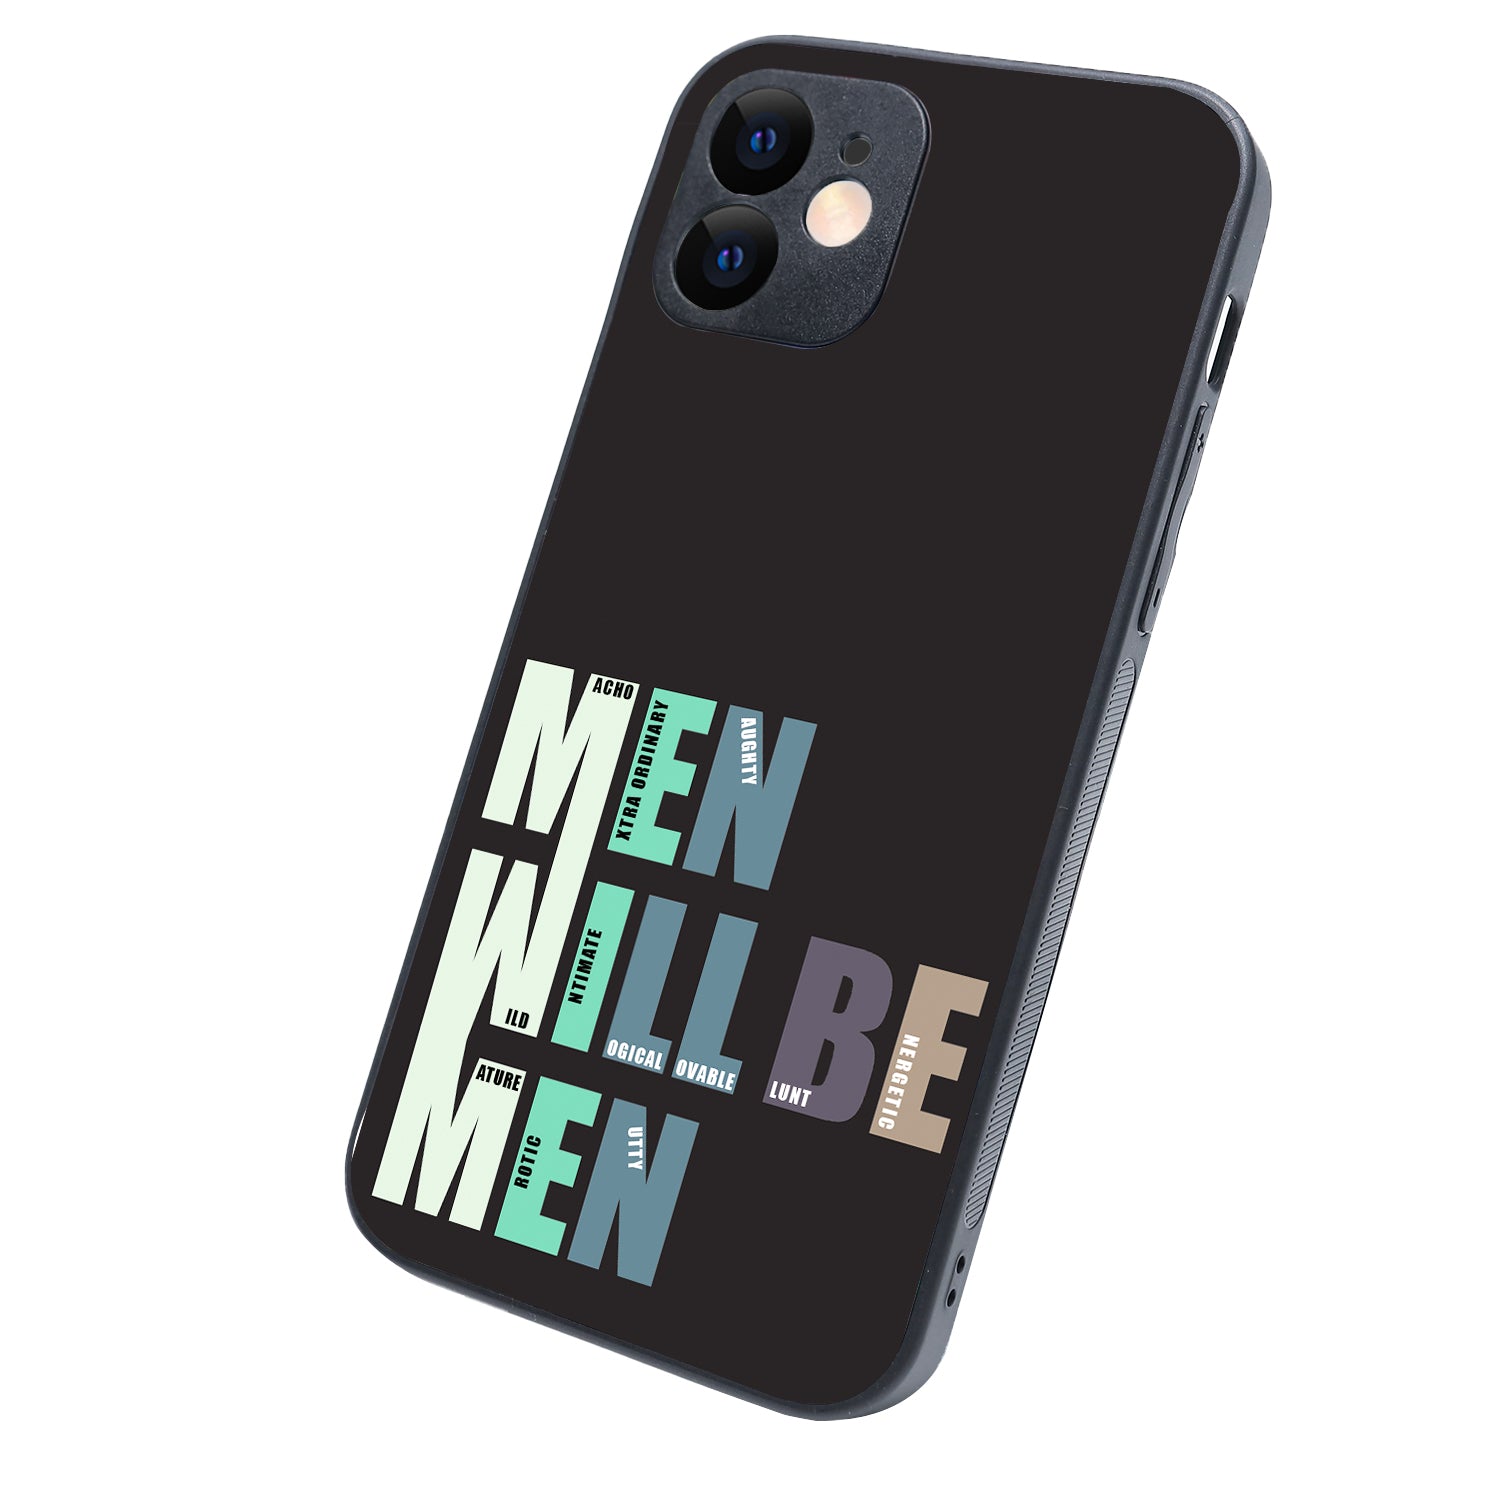 Men Will Be Men Motivational Quotes iPhone 12 Case